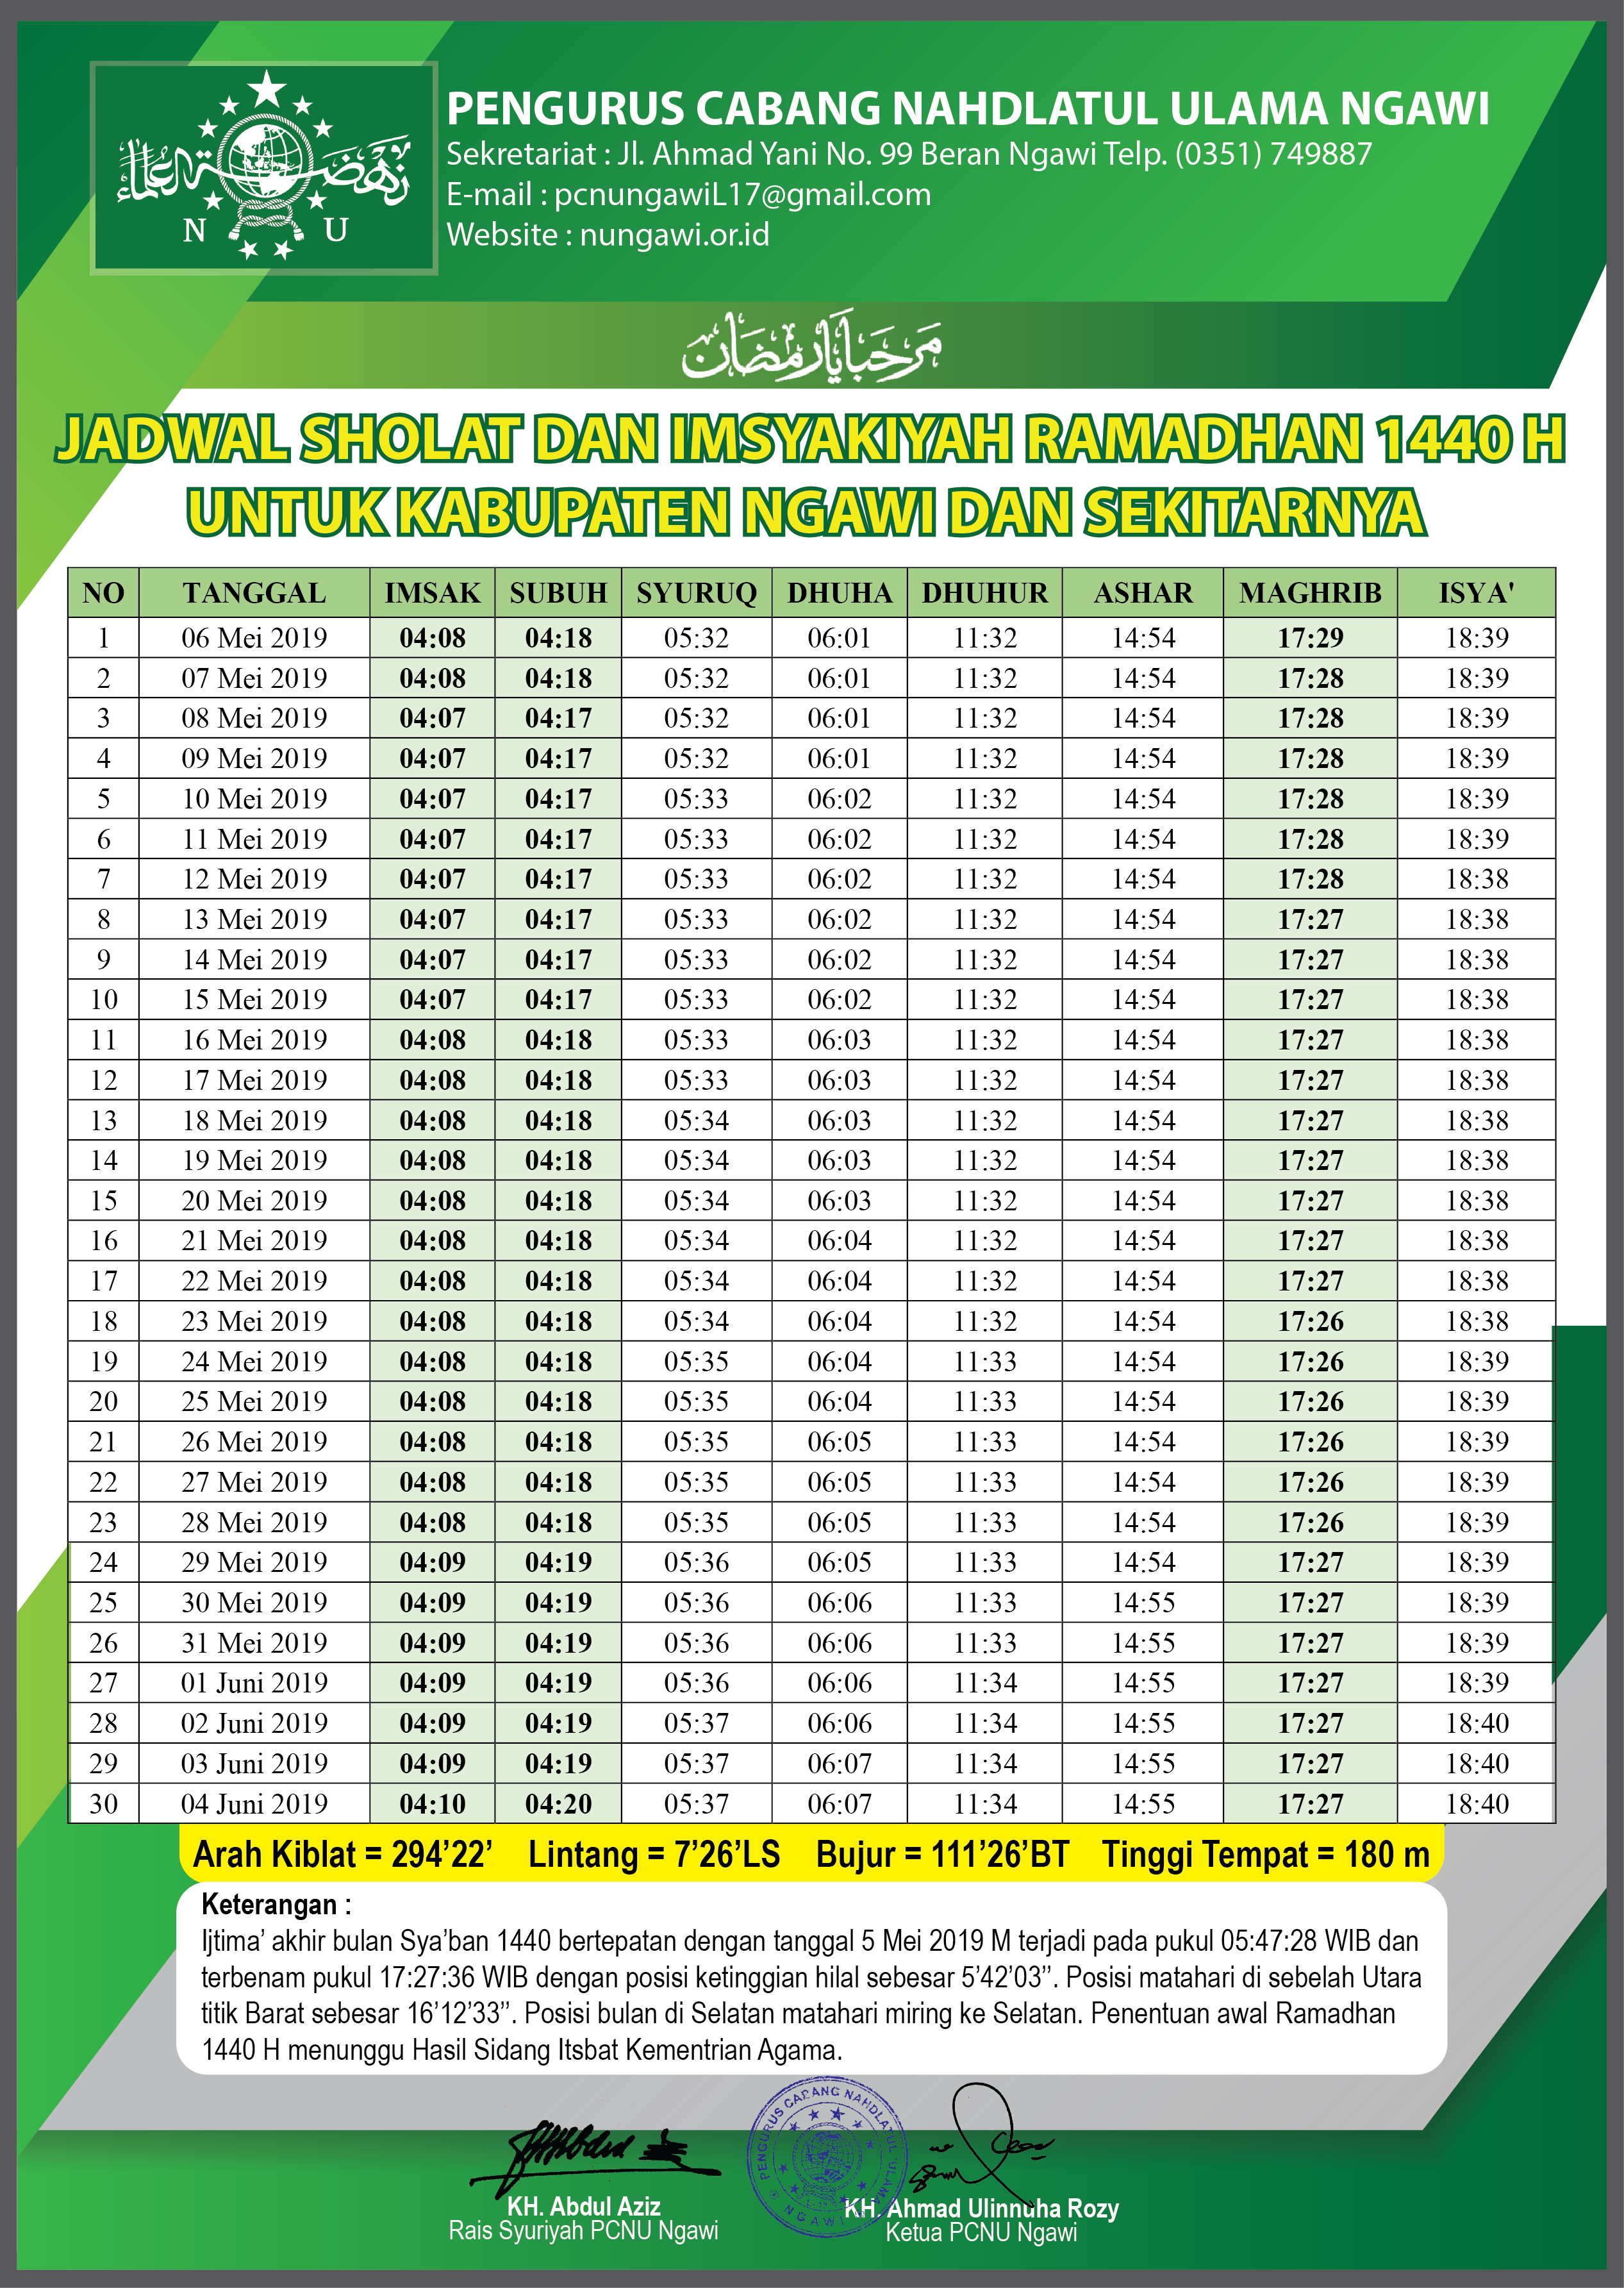 Jadwal Shalat dan Imsyakiyah Wilayah Kabupaten Ngawi dan Sekitarnya